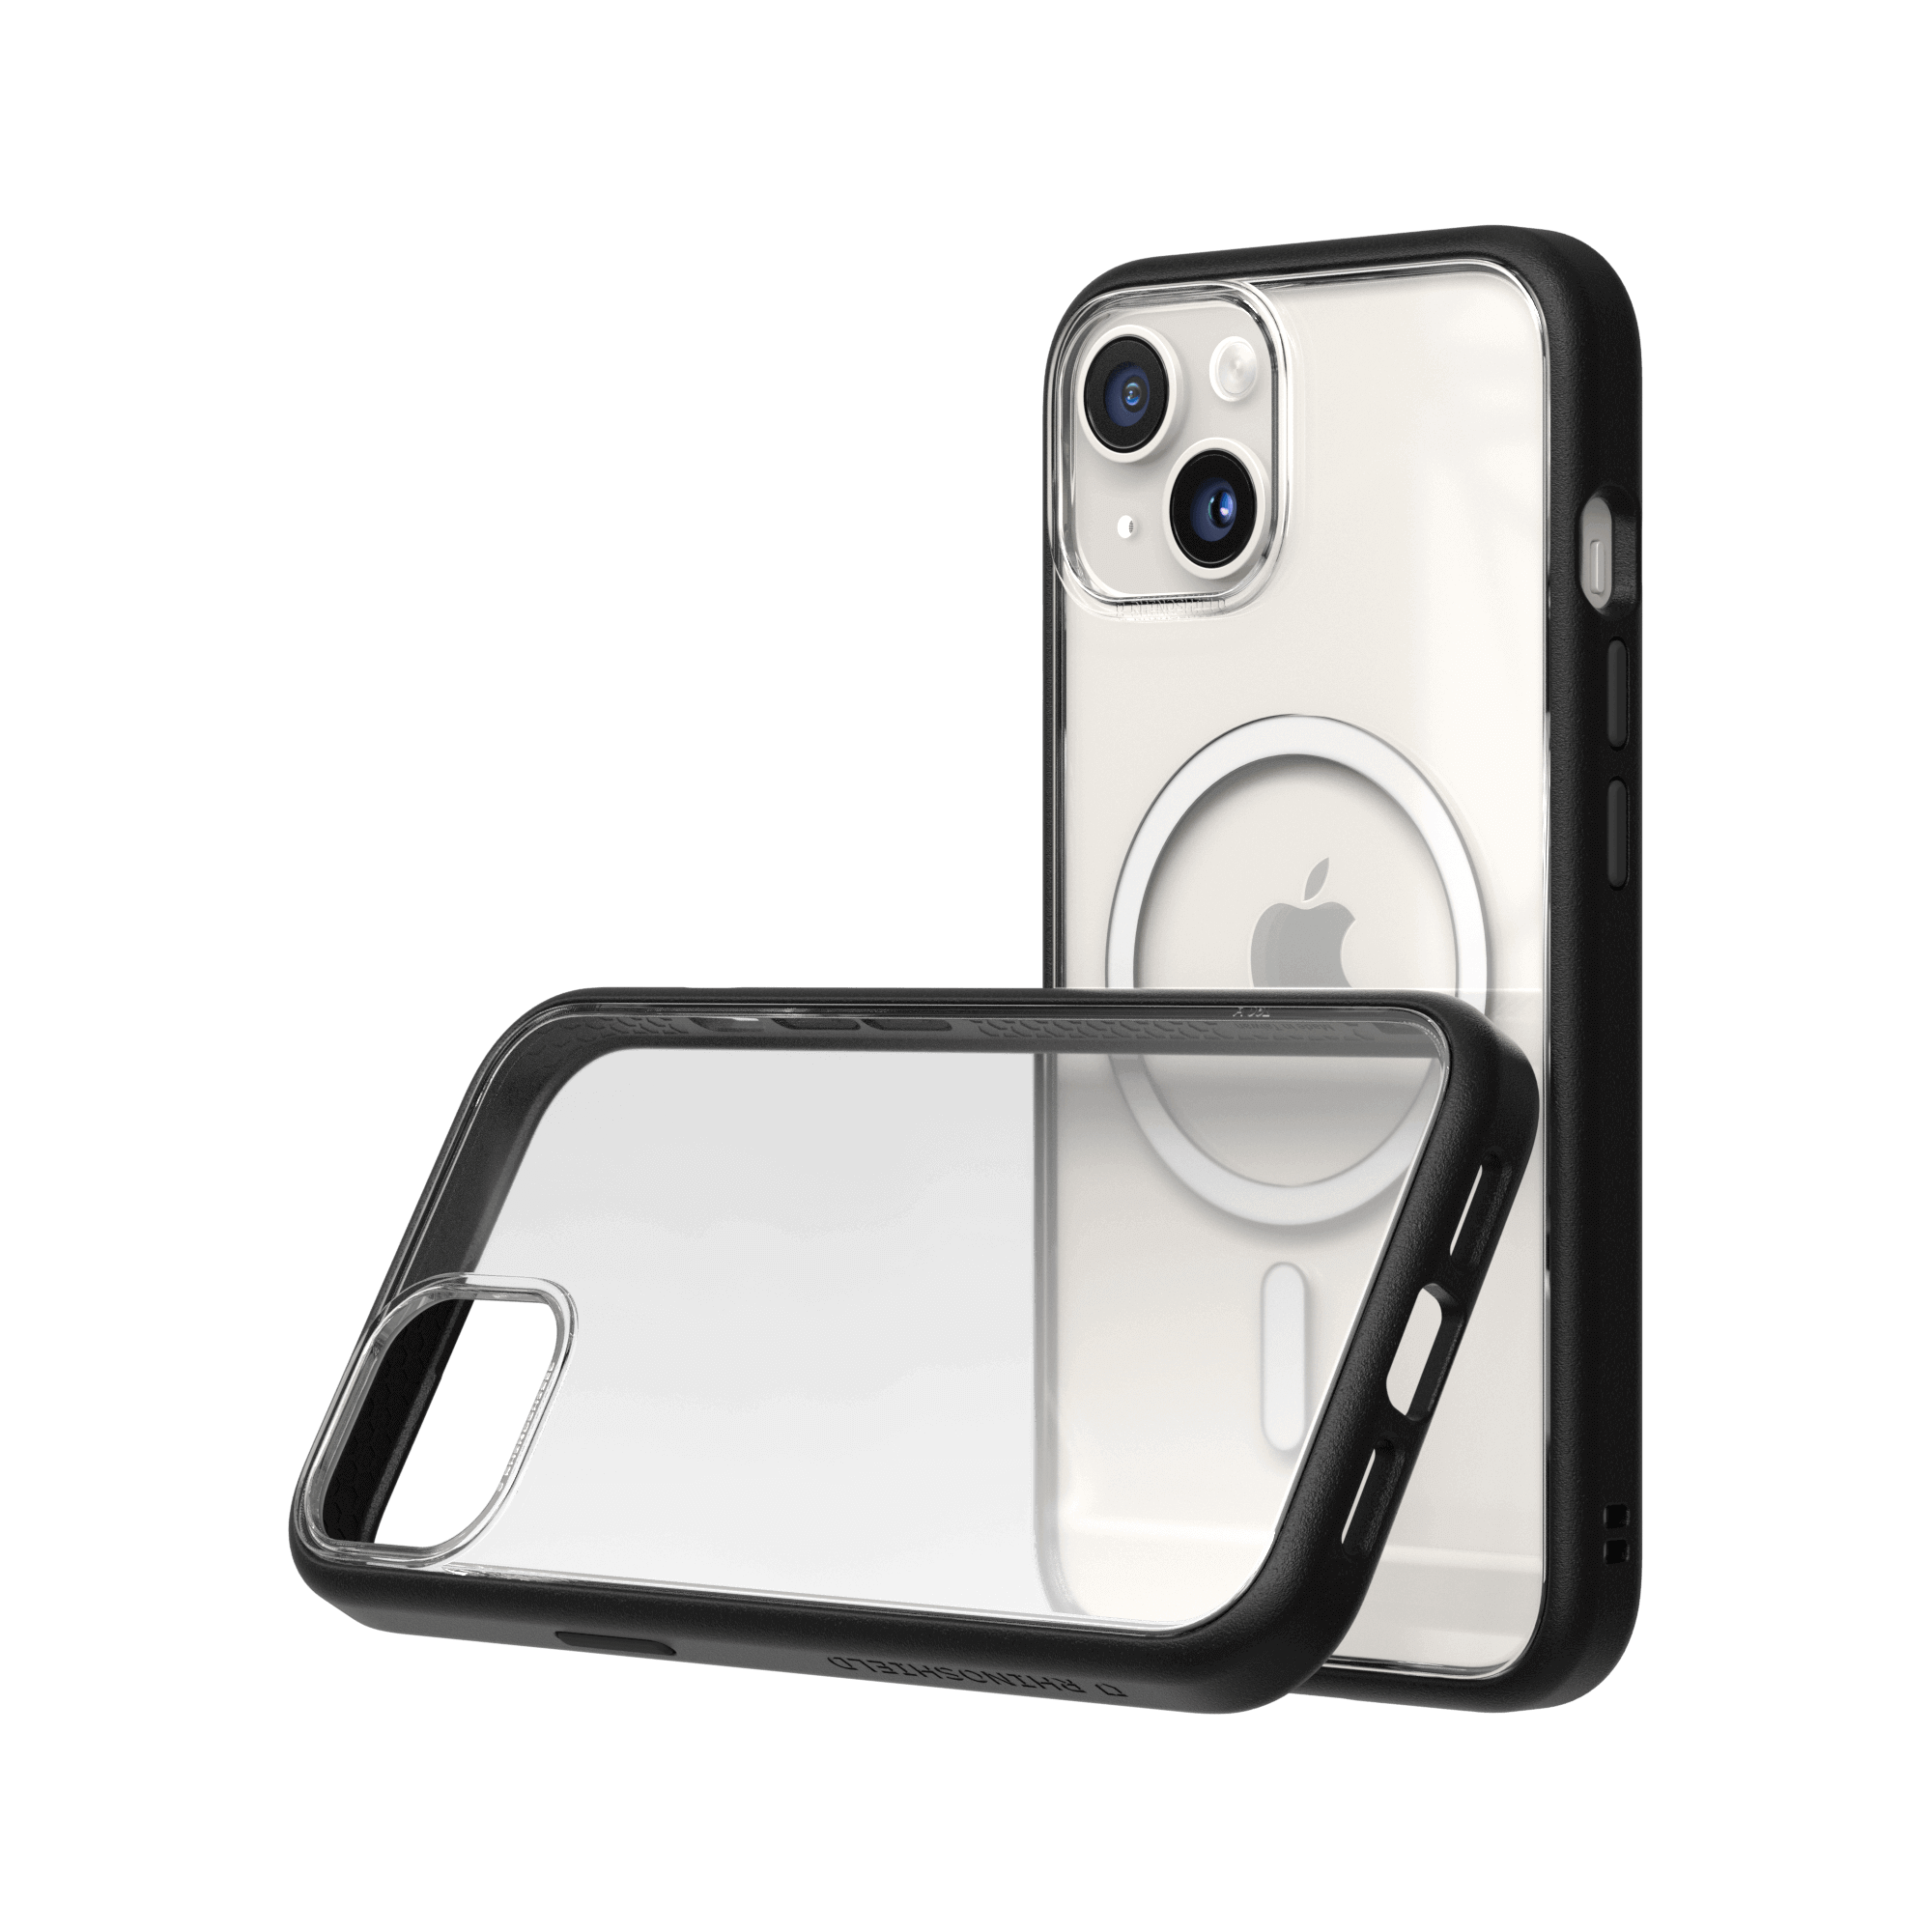 RhinoShield Protector de pantalla mate de impacto 3D compatible con iPhone  12 Mini, protección ultra impacto, bordes curvados 3D, cobertura completa